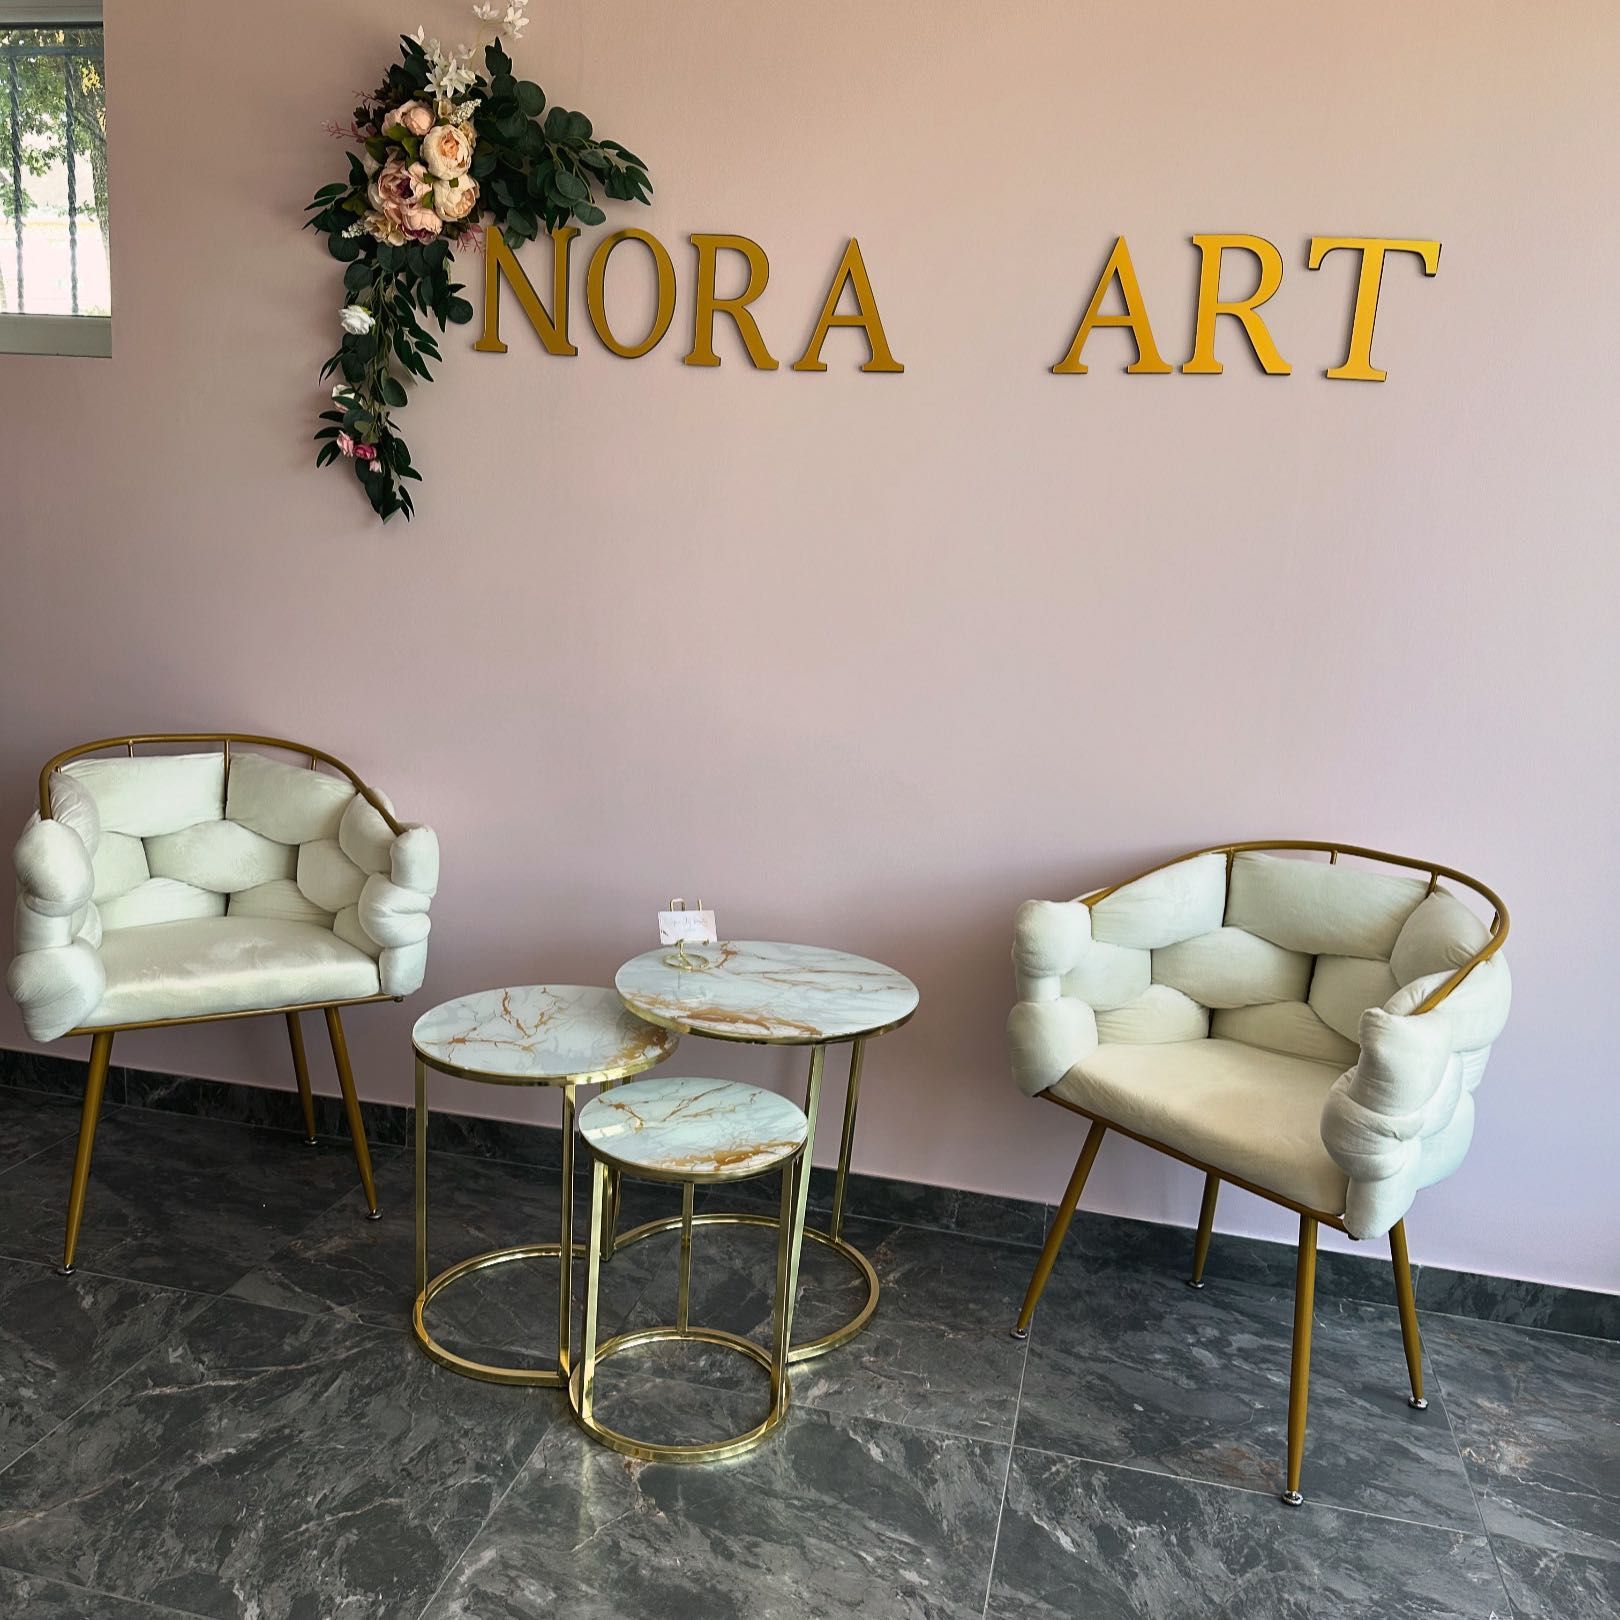 Nora Art, 9 Rue du Moulin Cassé, 44460, Saint-Nicolas-de-Redon